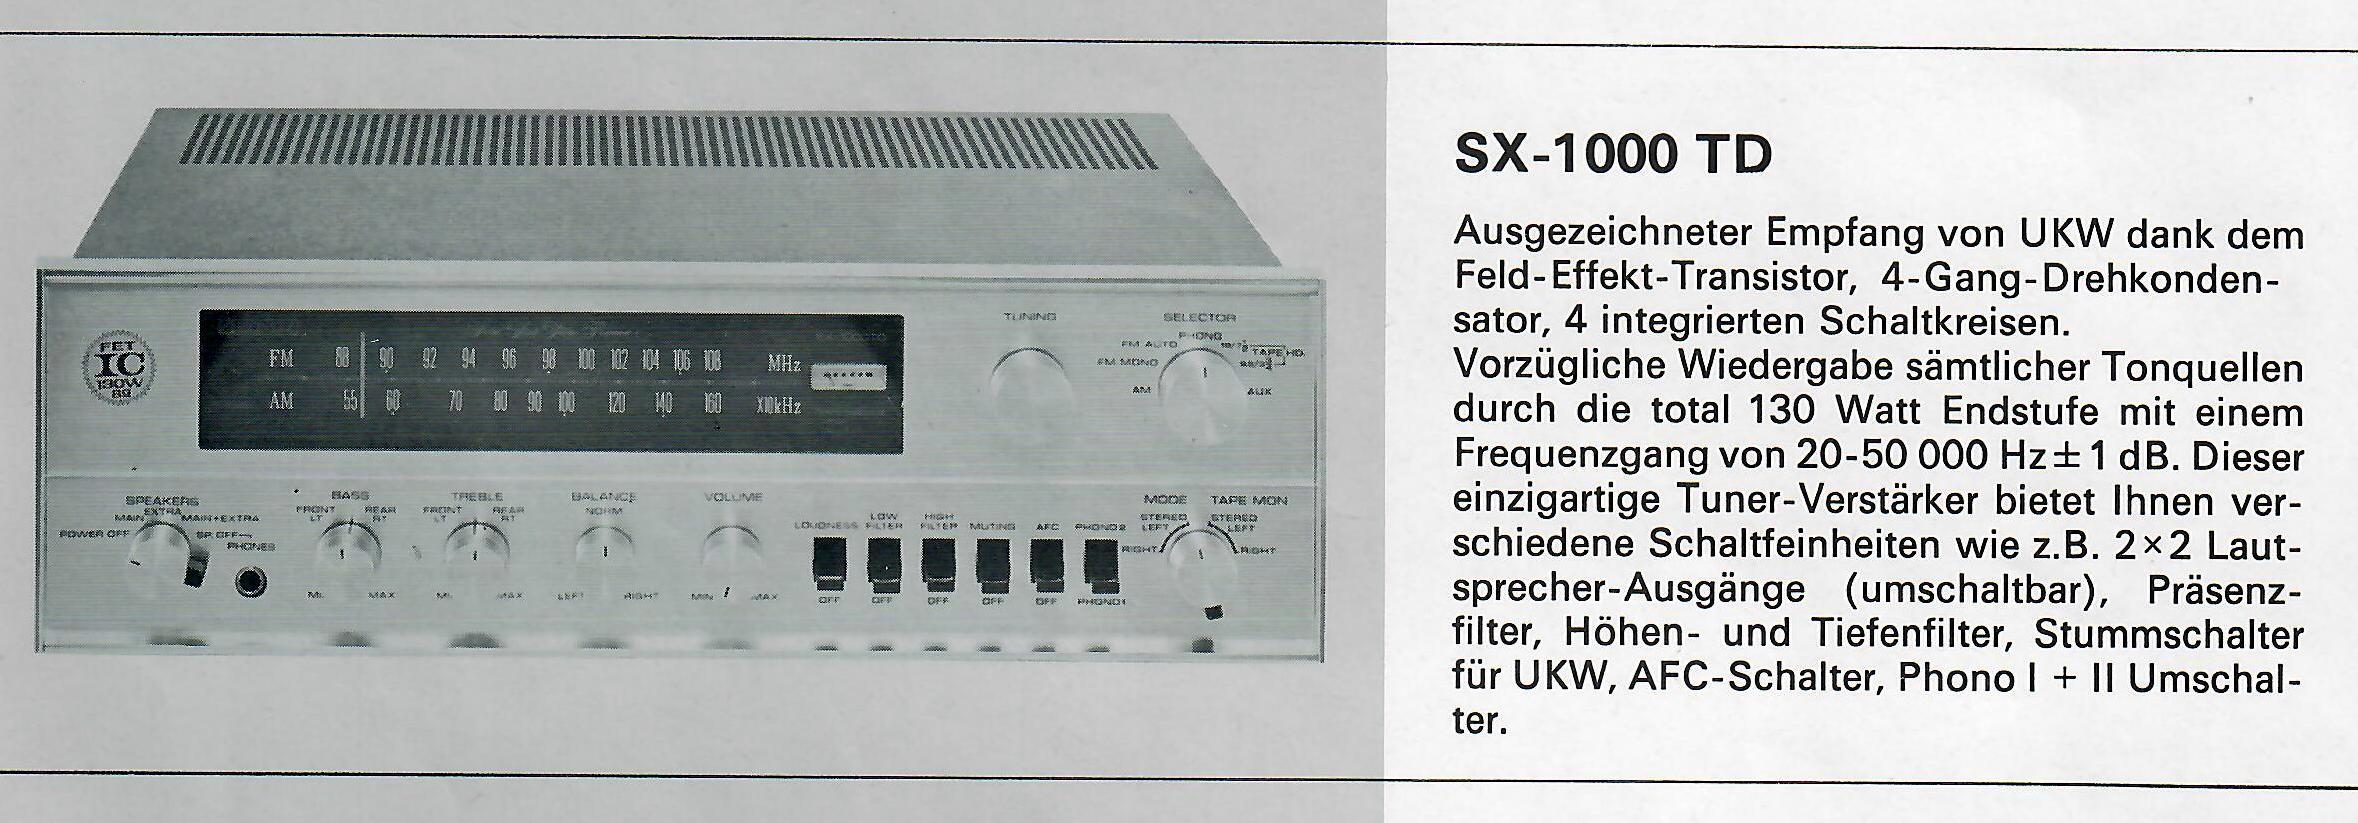 Pioneer SX-1000 TD-Prospekt-1.jpg